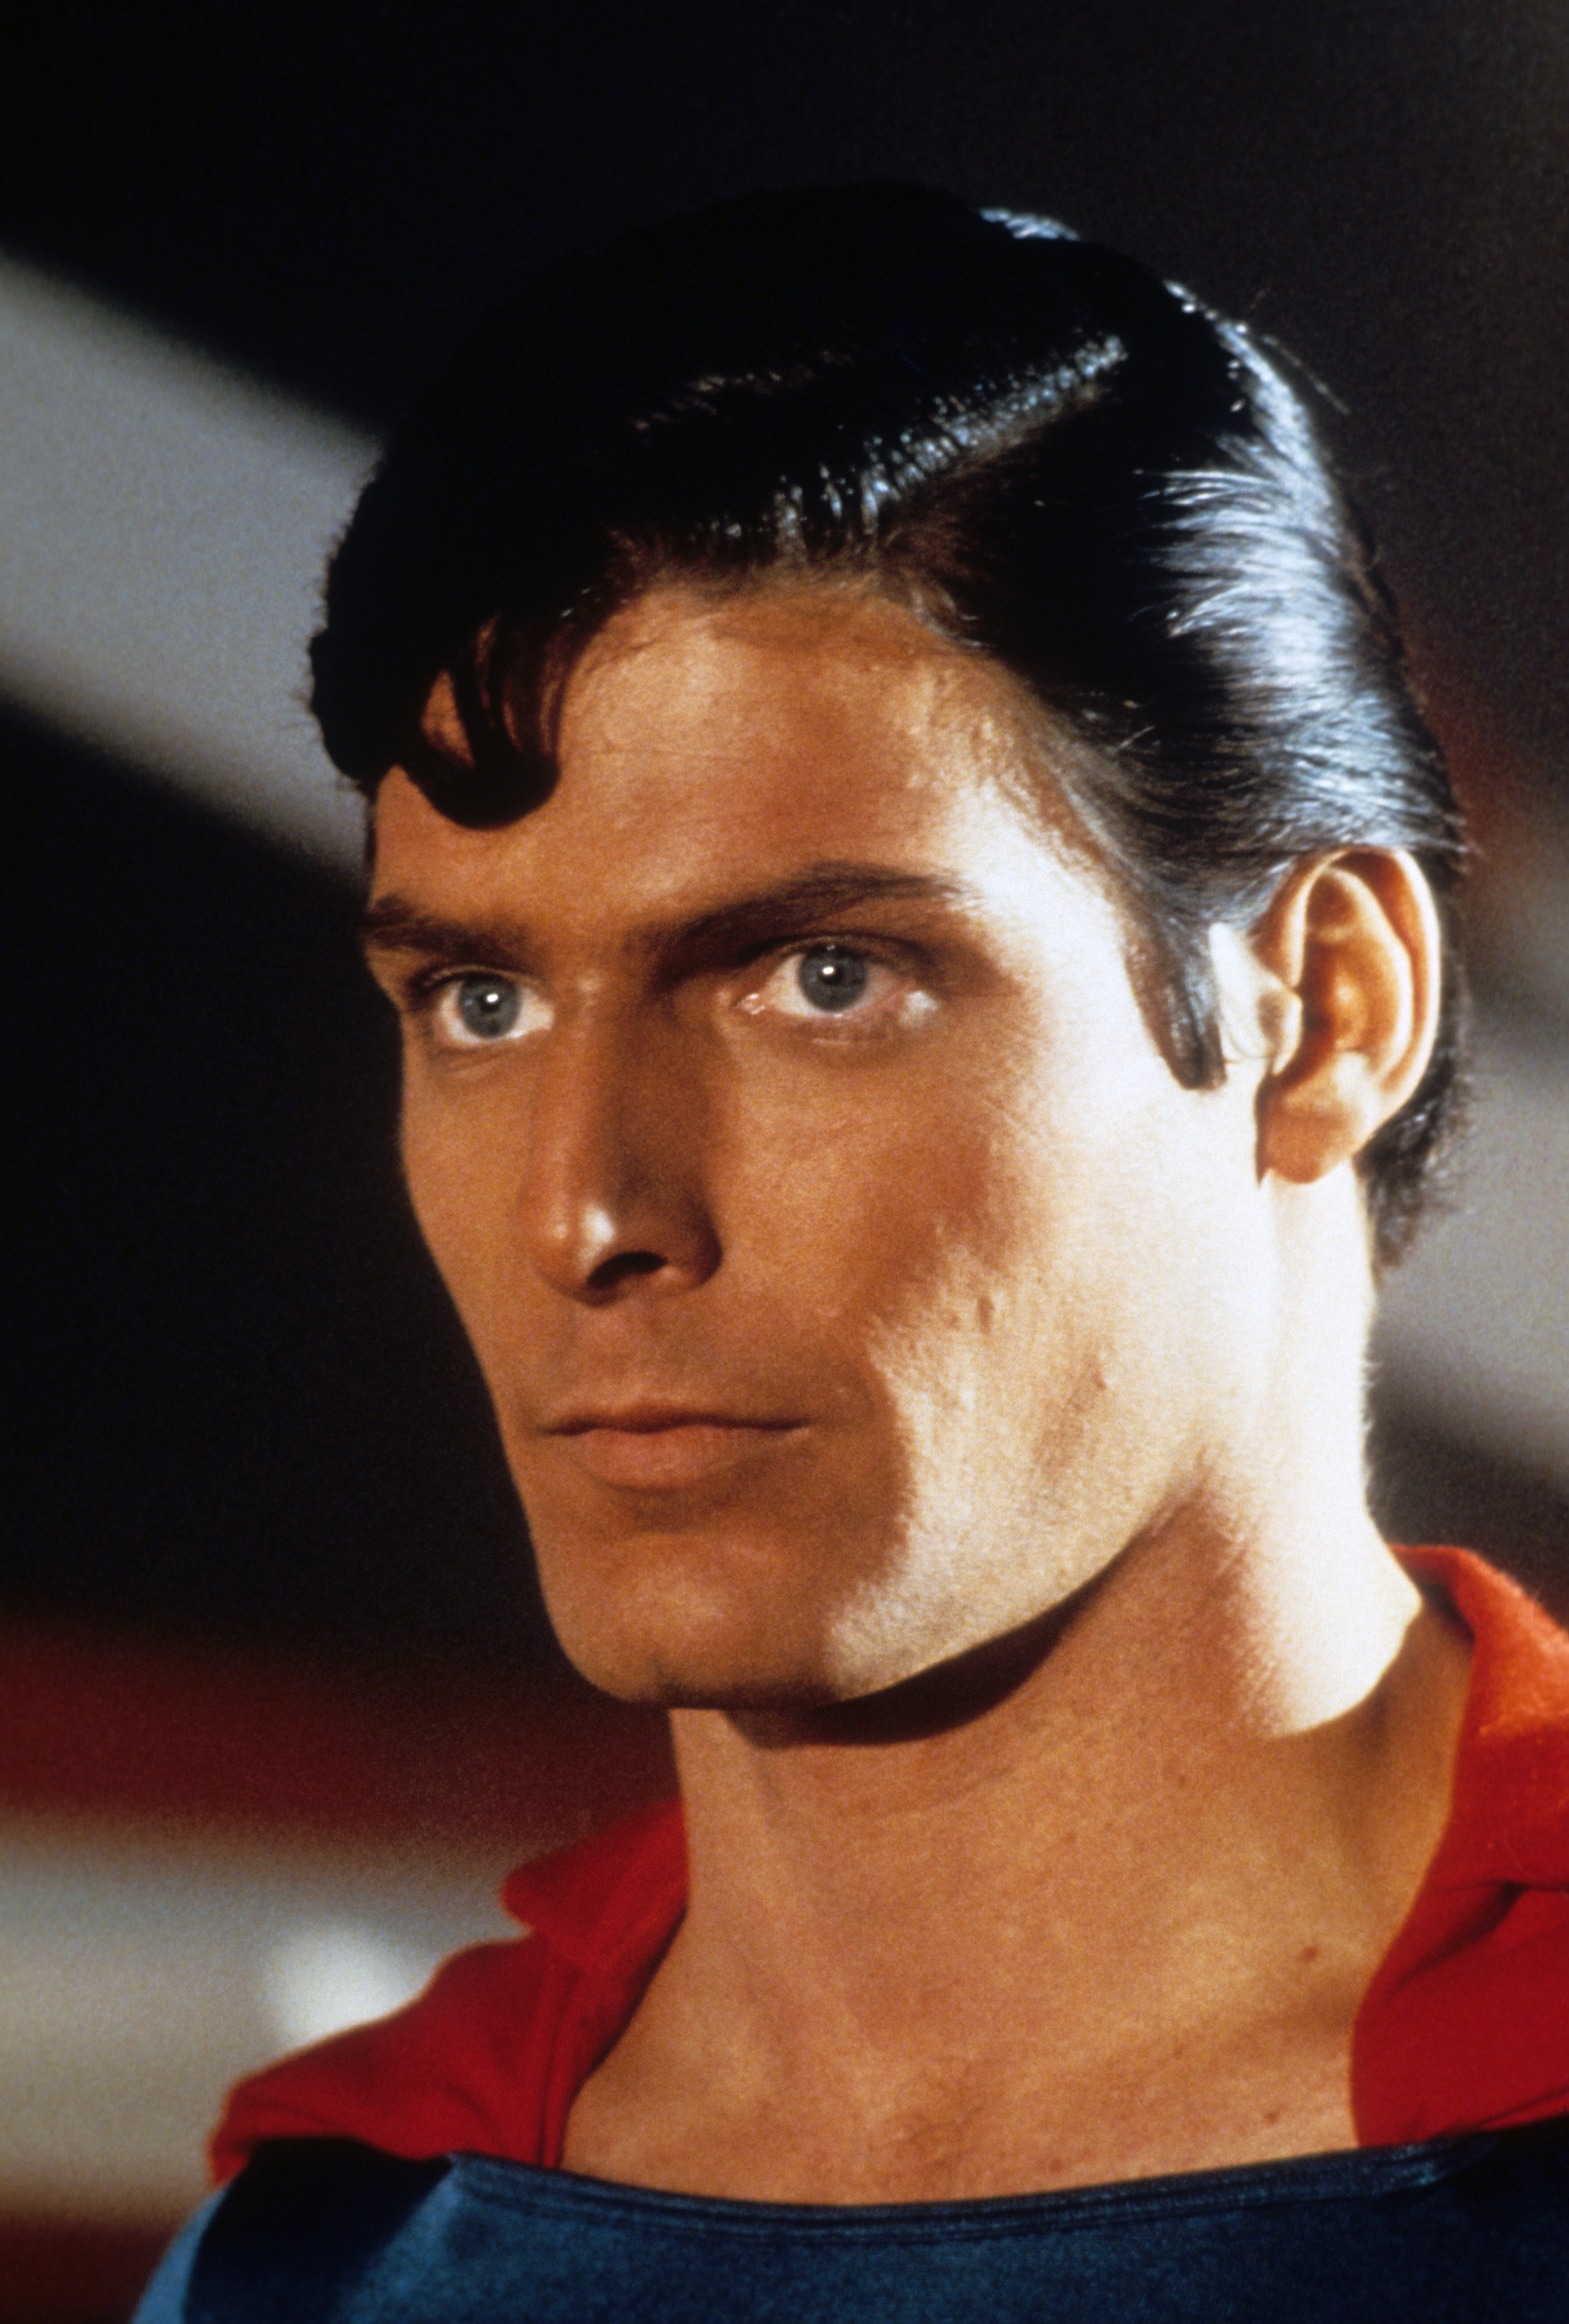 Christopher Reeve dans "Superman" en 1978 | Source : Getty Images